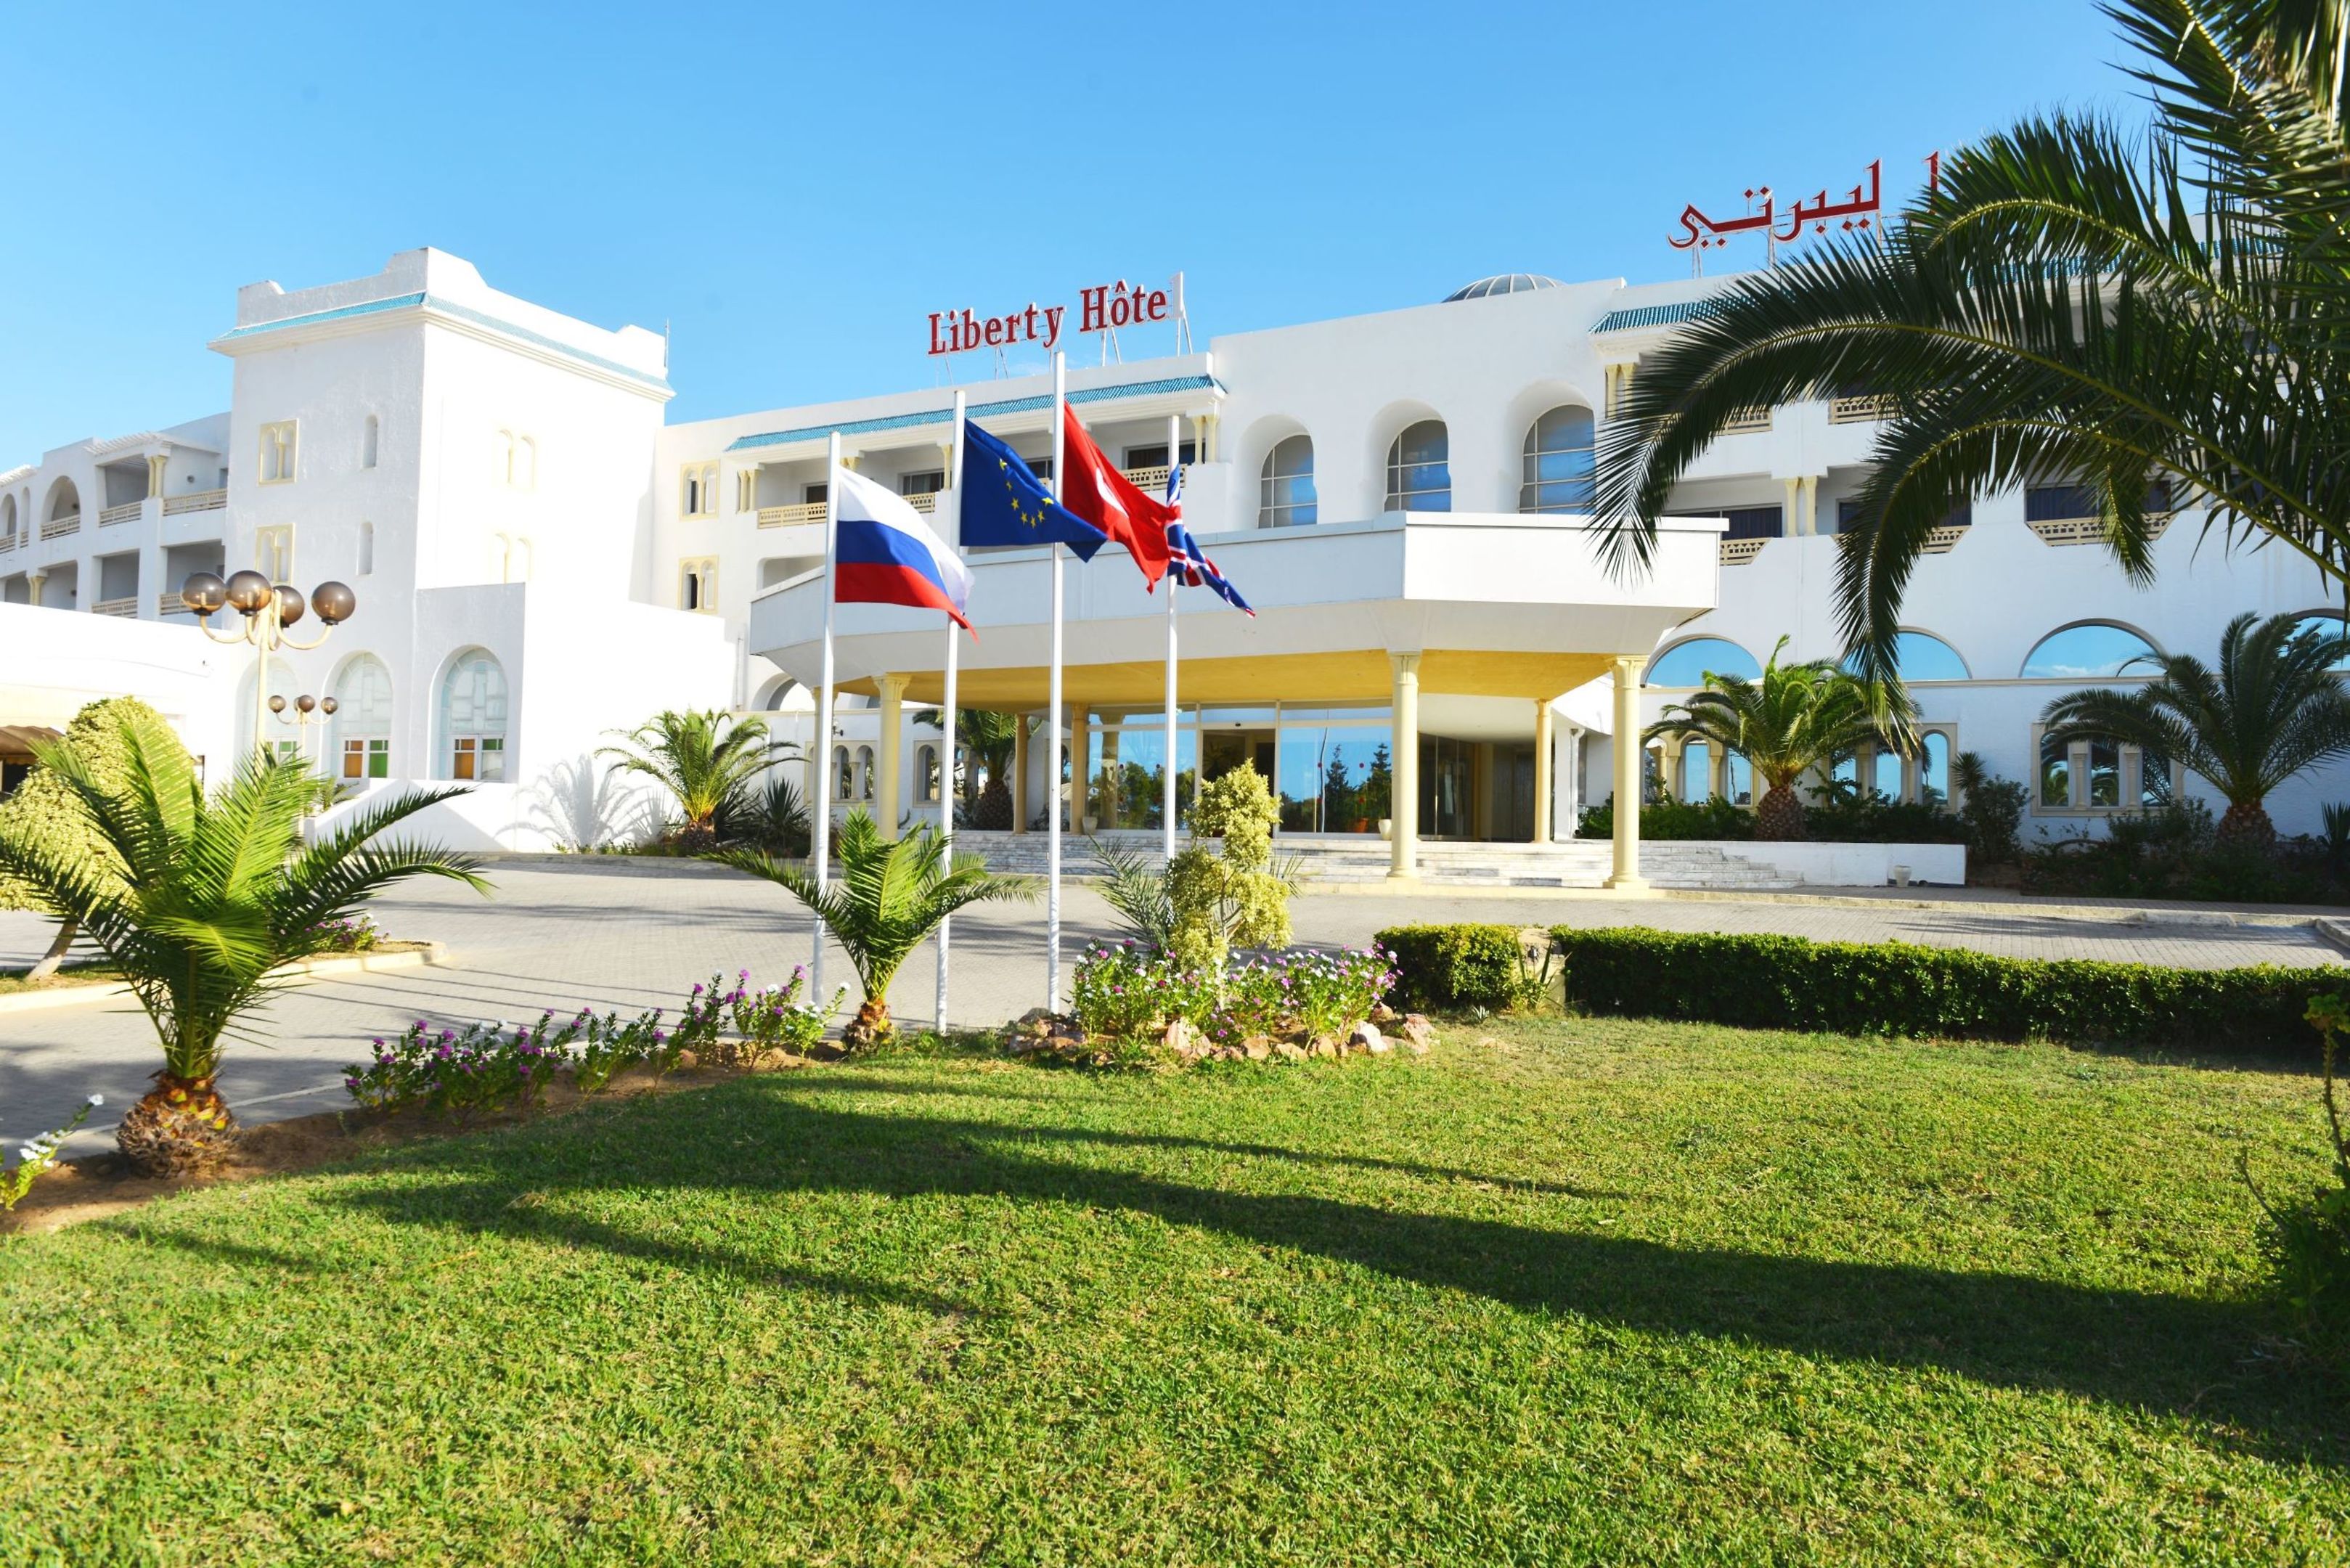 Liberty Resort